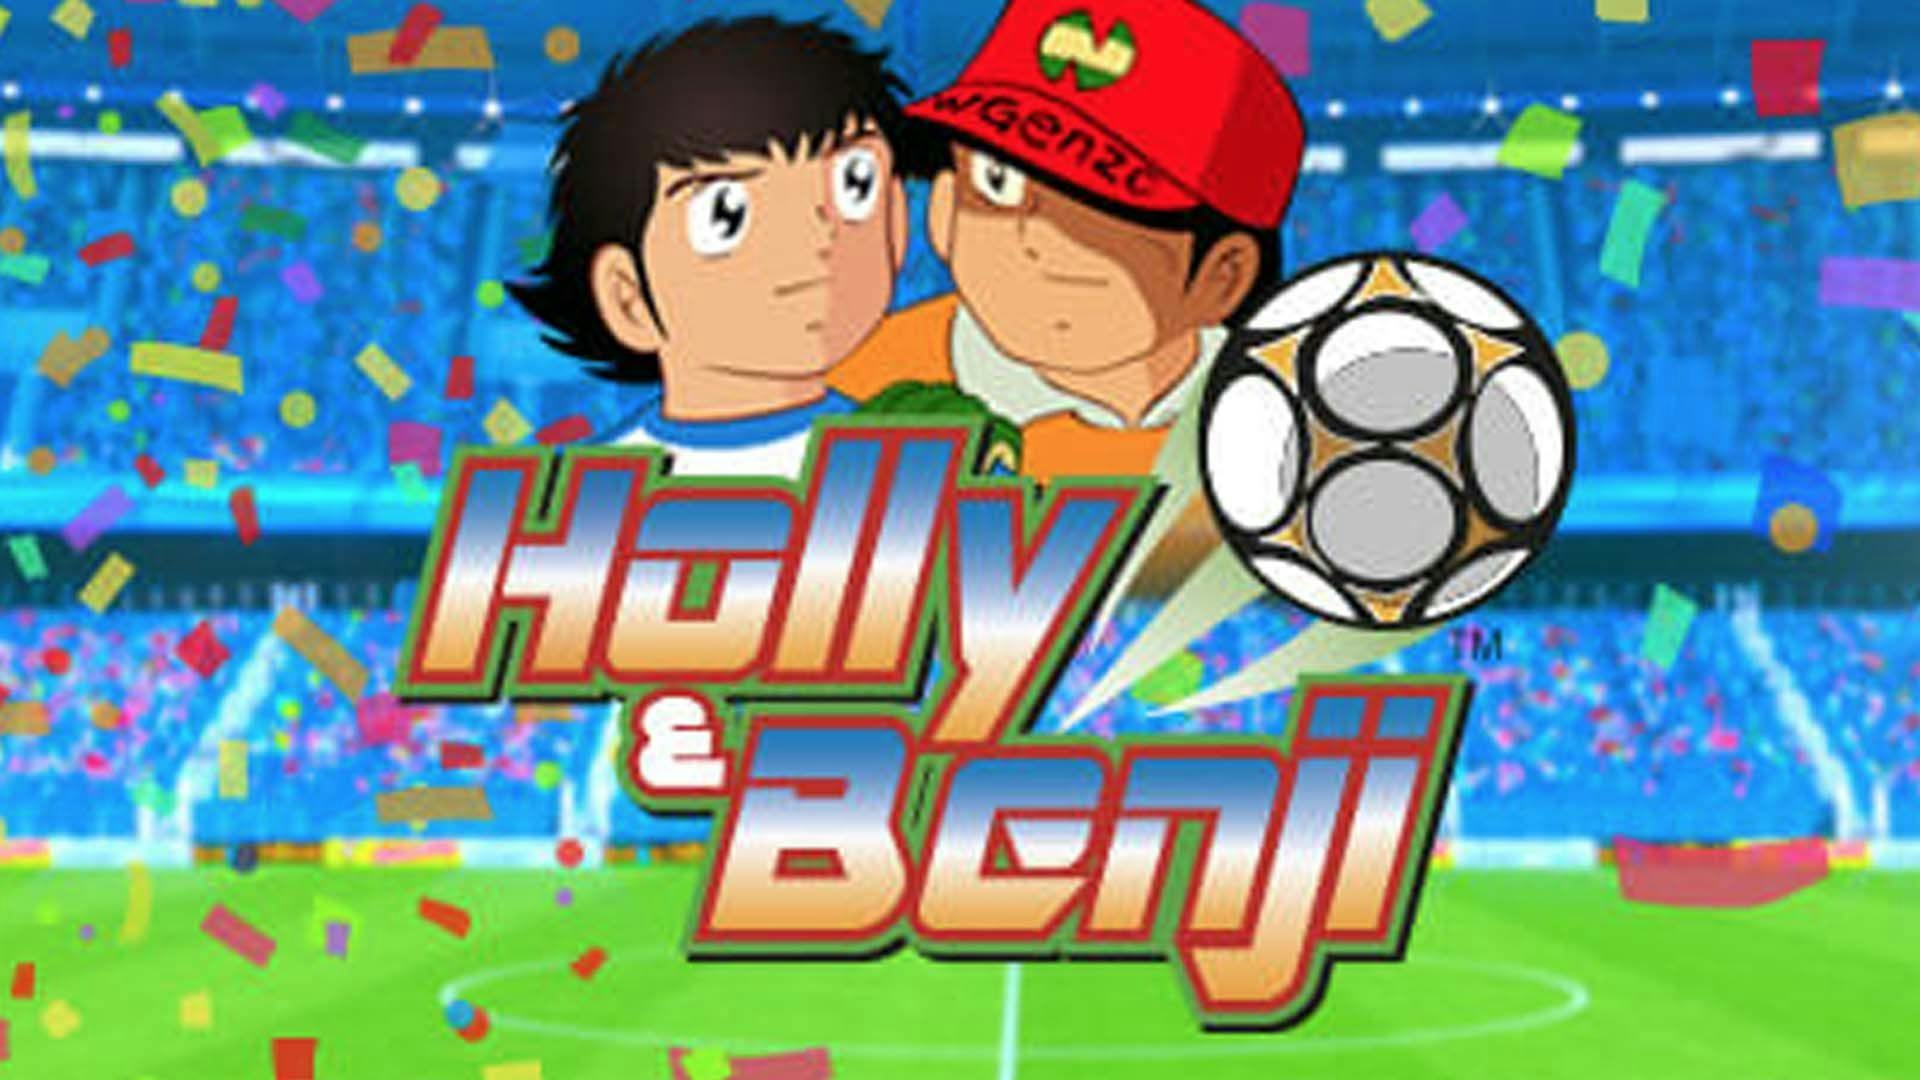 Holly e Benji Slot Machine Online Free Play